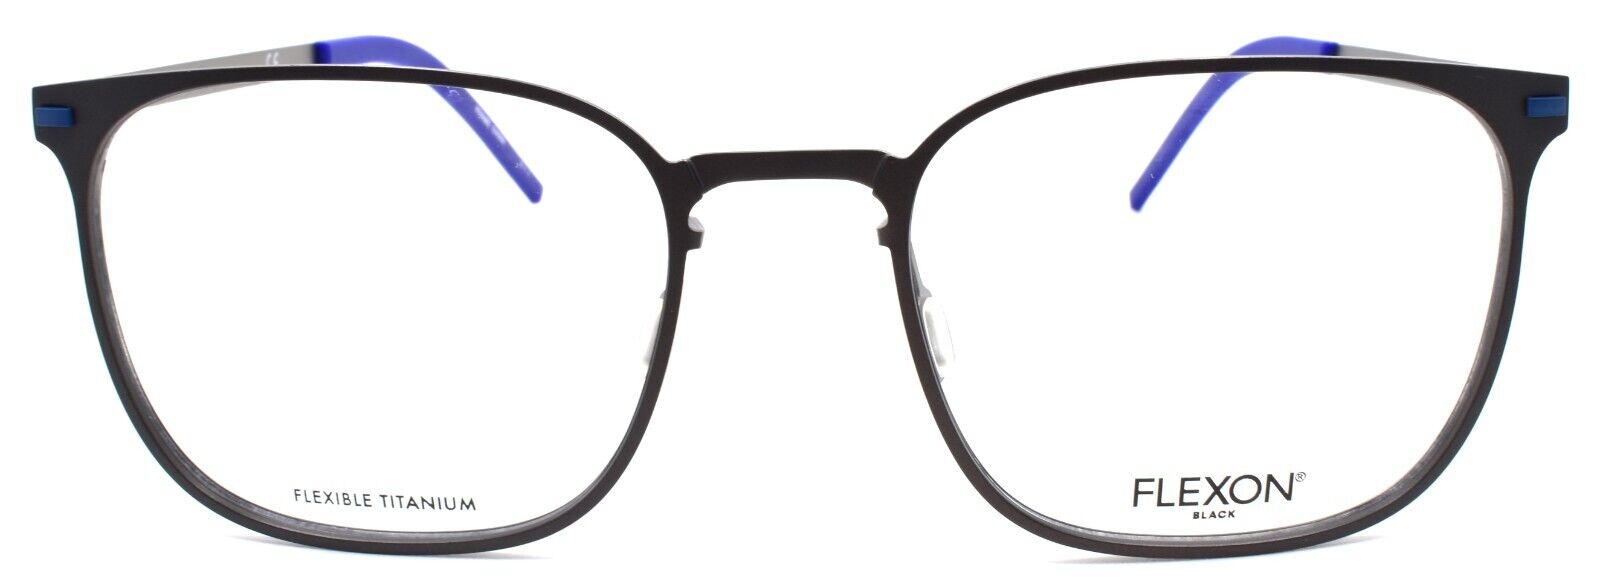 2-Flexon B2029 034 Men's Eyeglasses Dark Gunmetal 53-20-145 Flexible Titanium-883900204637-IKSpecs